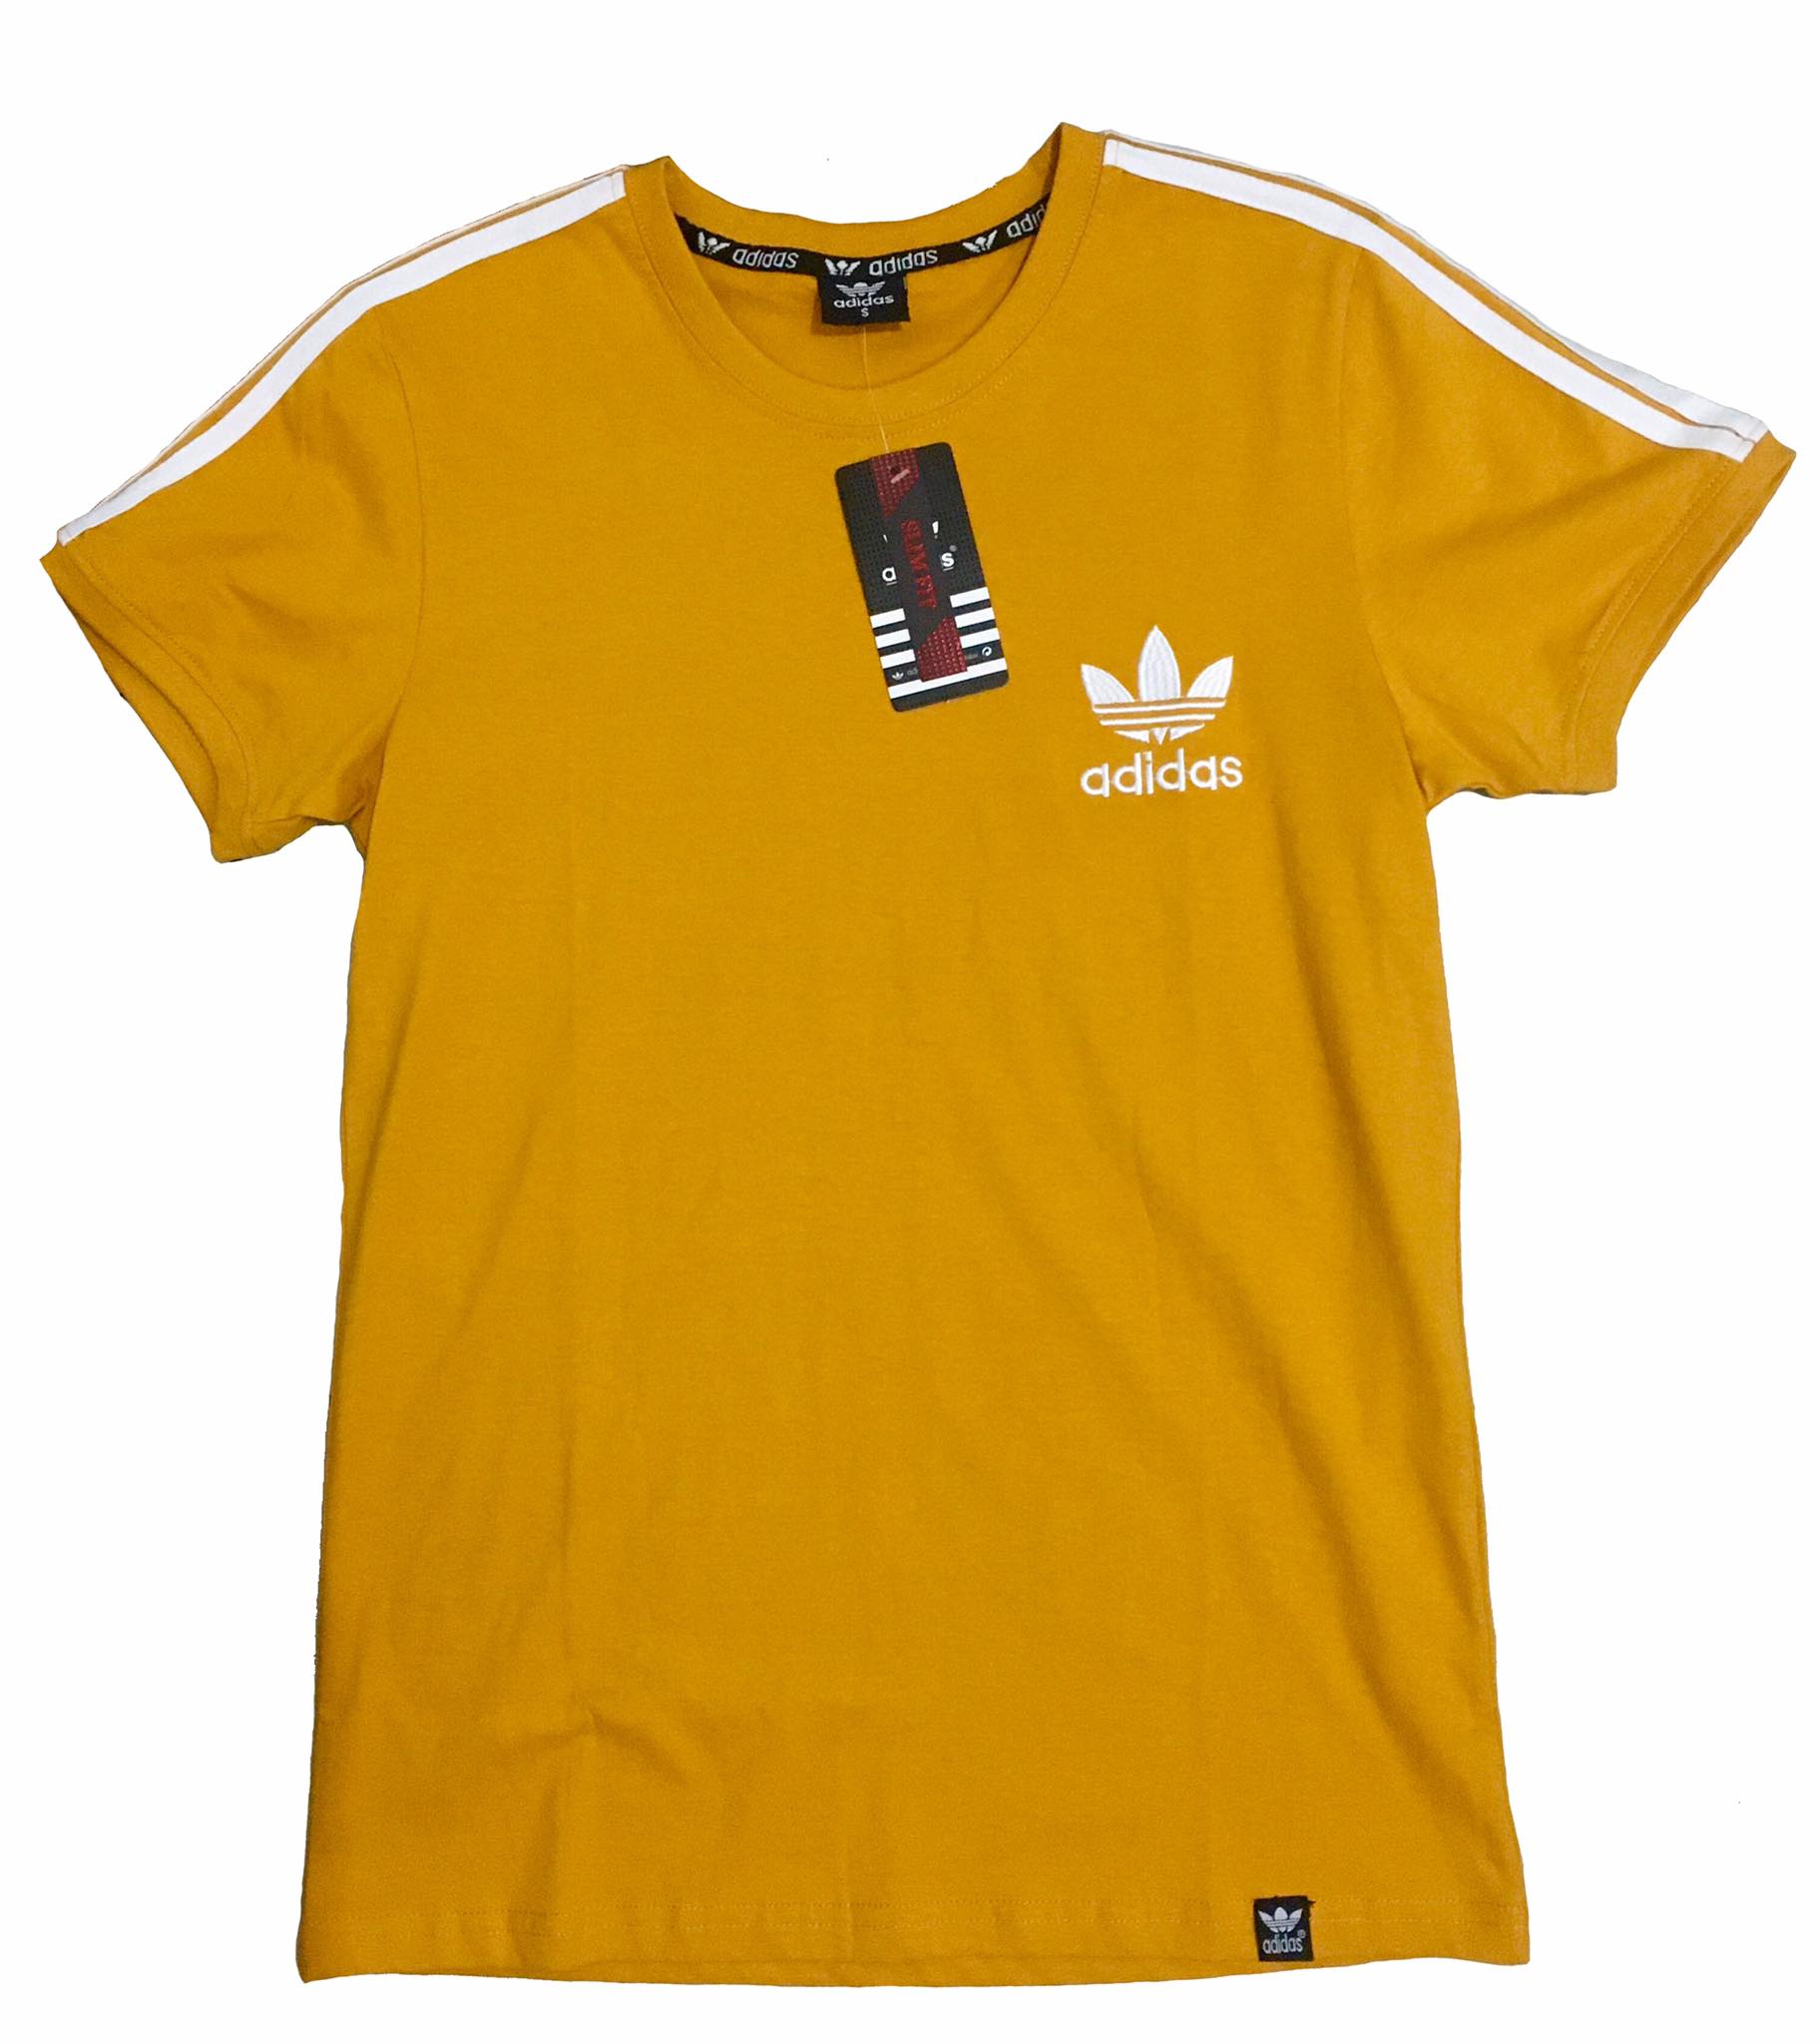 Buy Adidas T-Shirts Online | lazada.com.ph